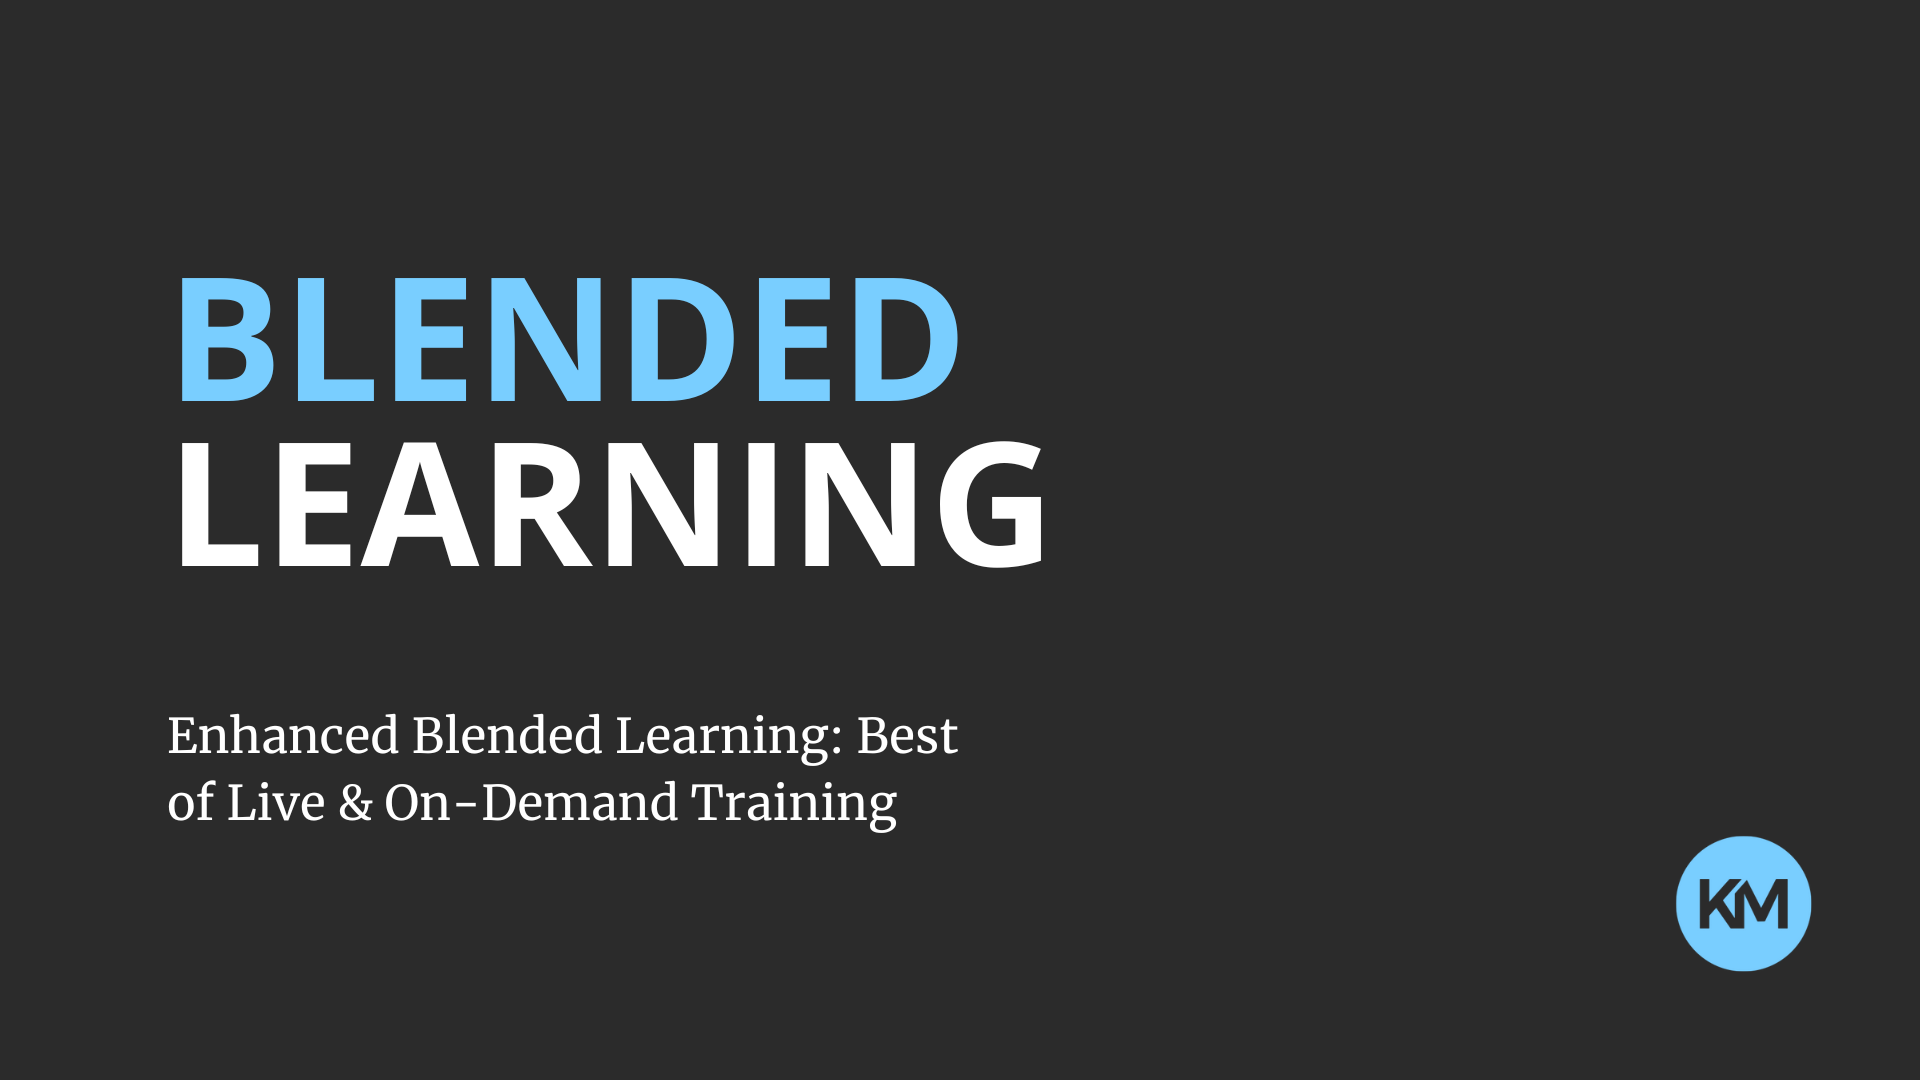 Enhanced Blended Learning: Best of Live & On-Demand Training